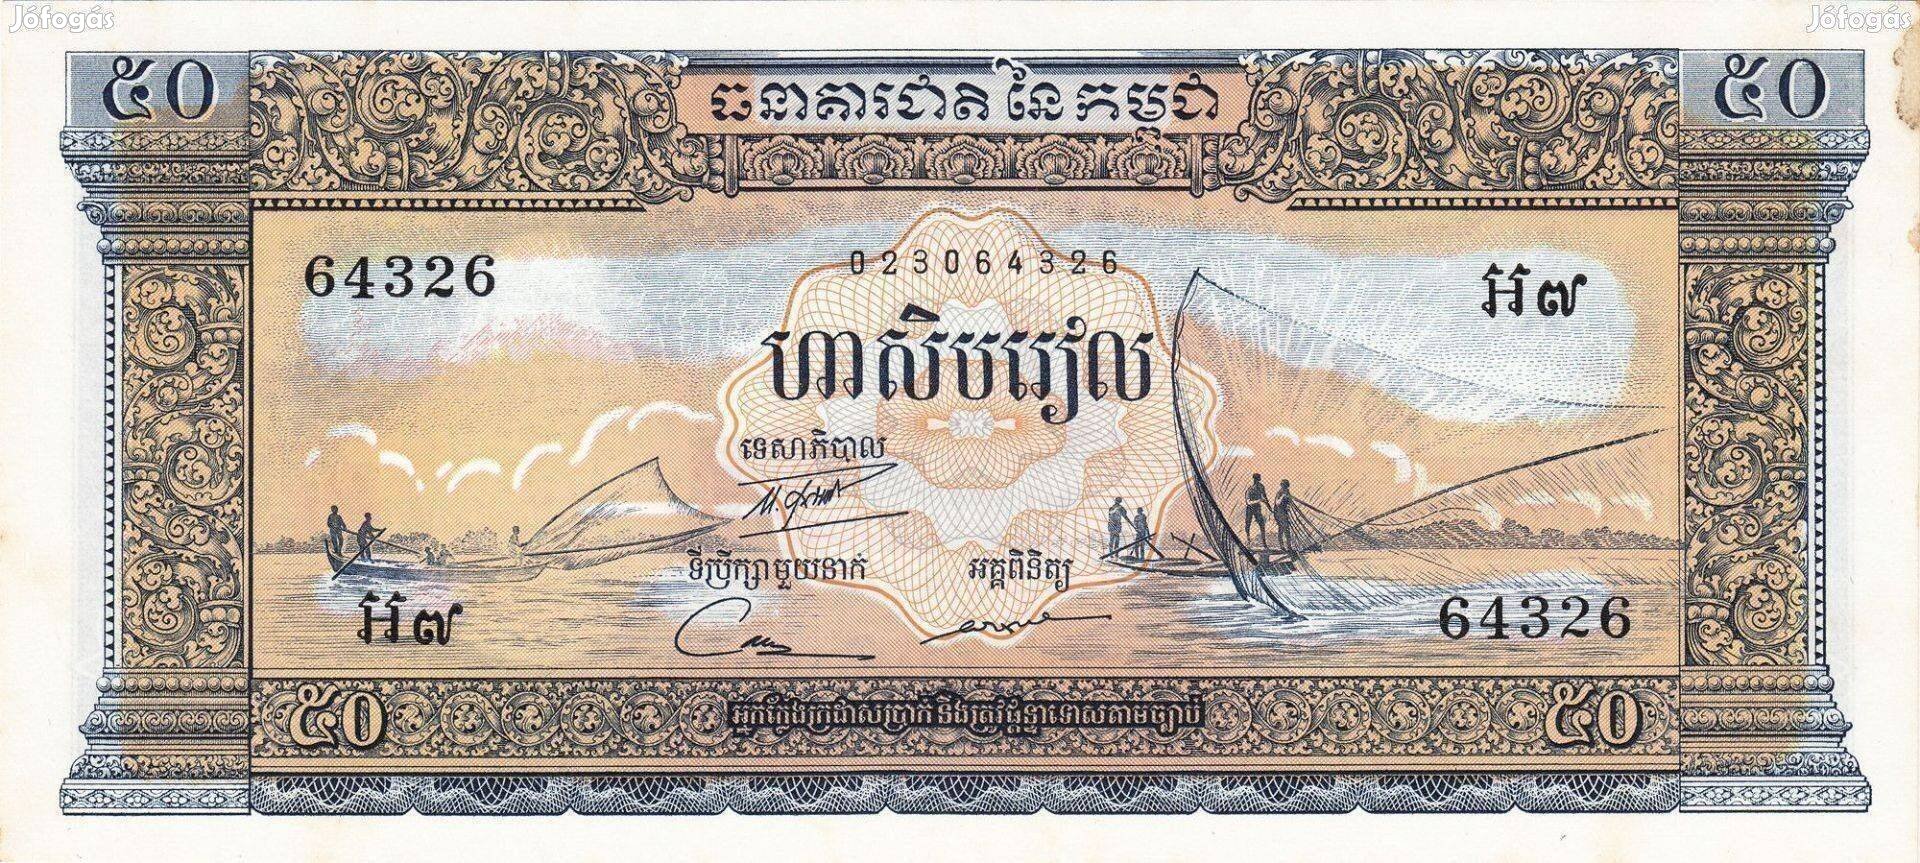 Ritka! 1956 -1974 / 50 Riels UNC Kambodzsa (E8)